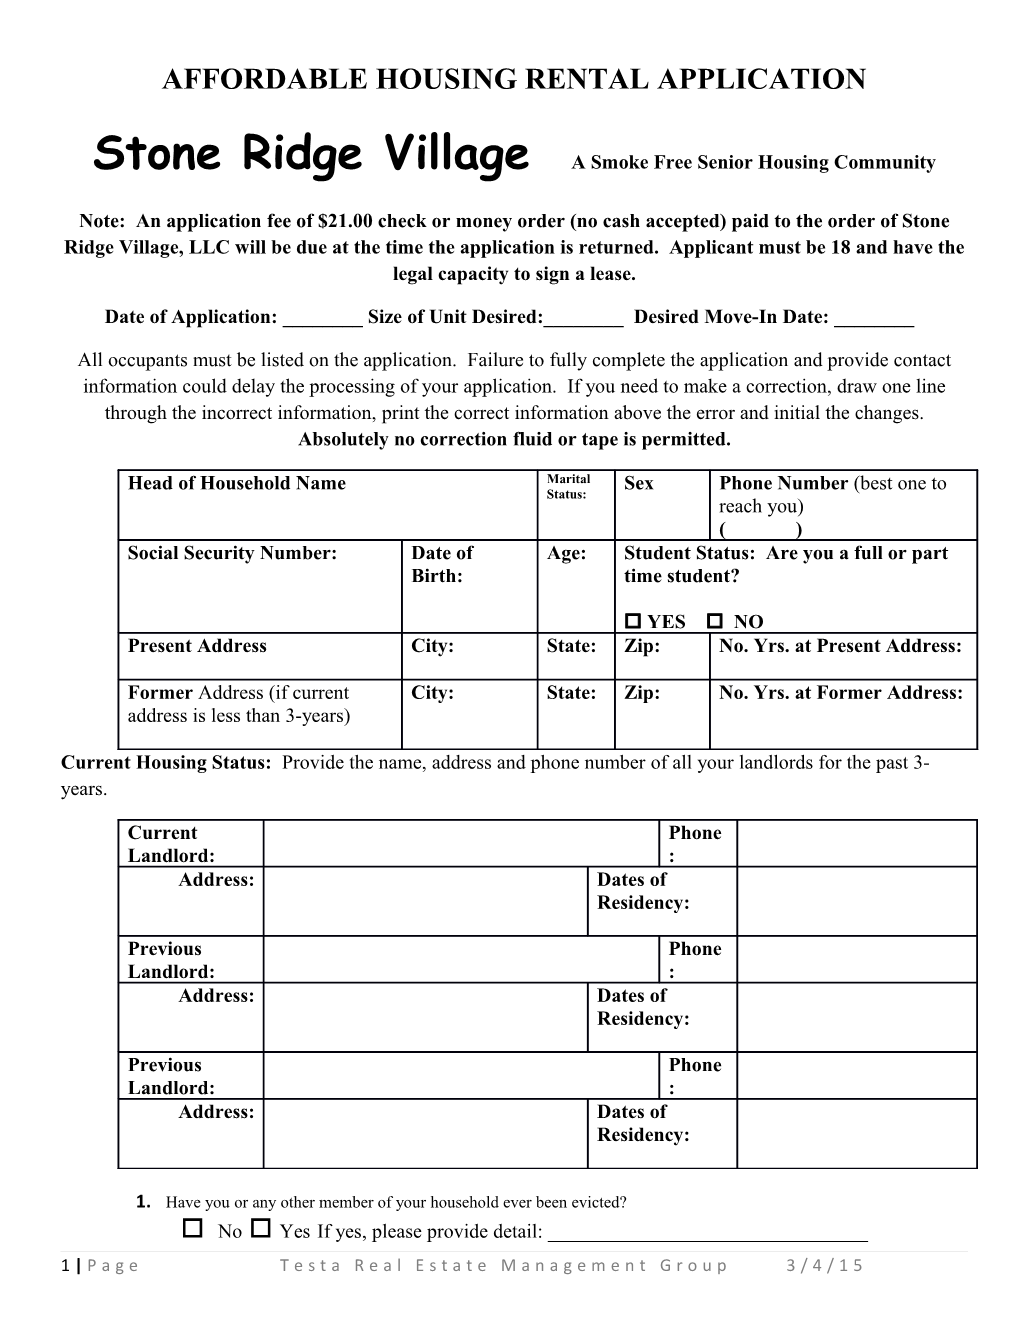 Stone Ridge Village a Smoke Free Senior Housing Community